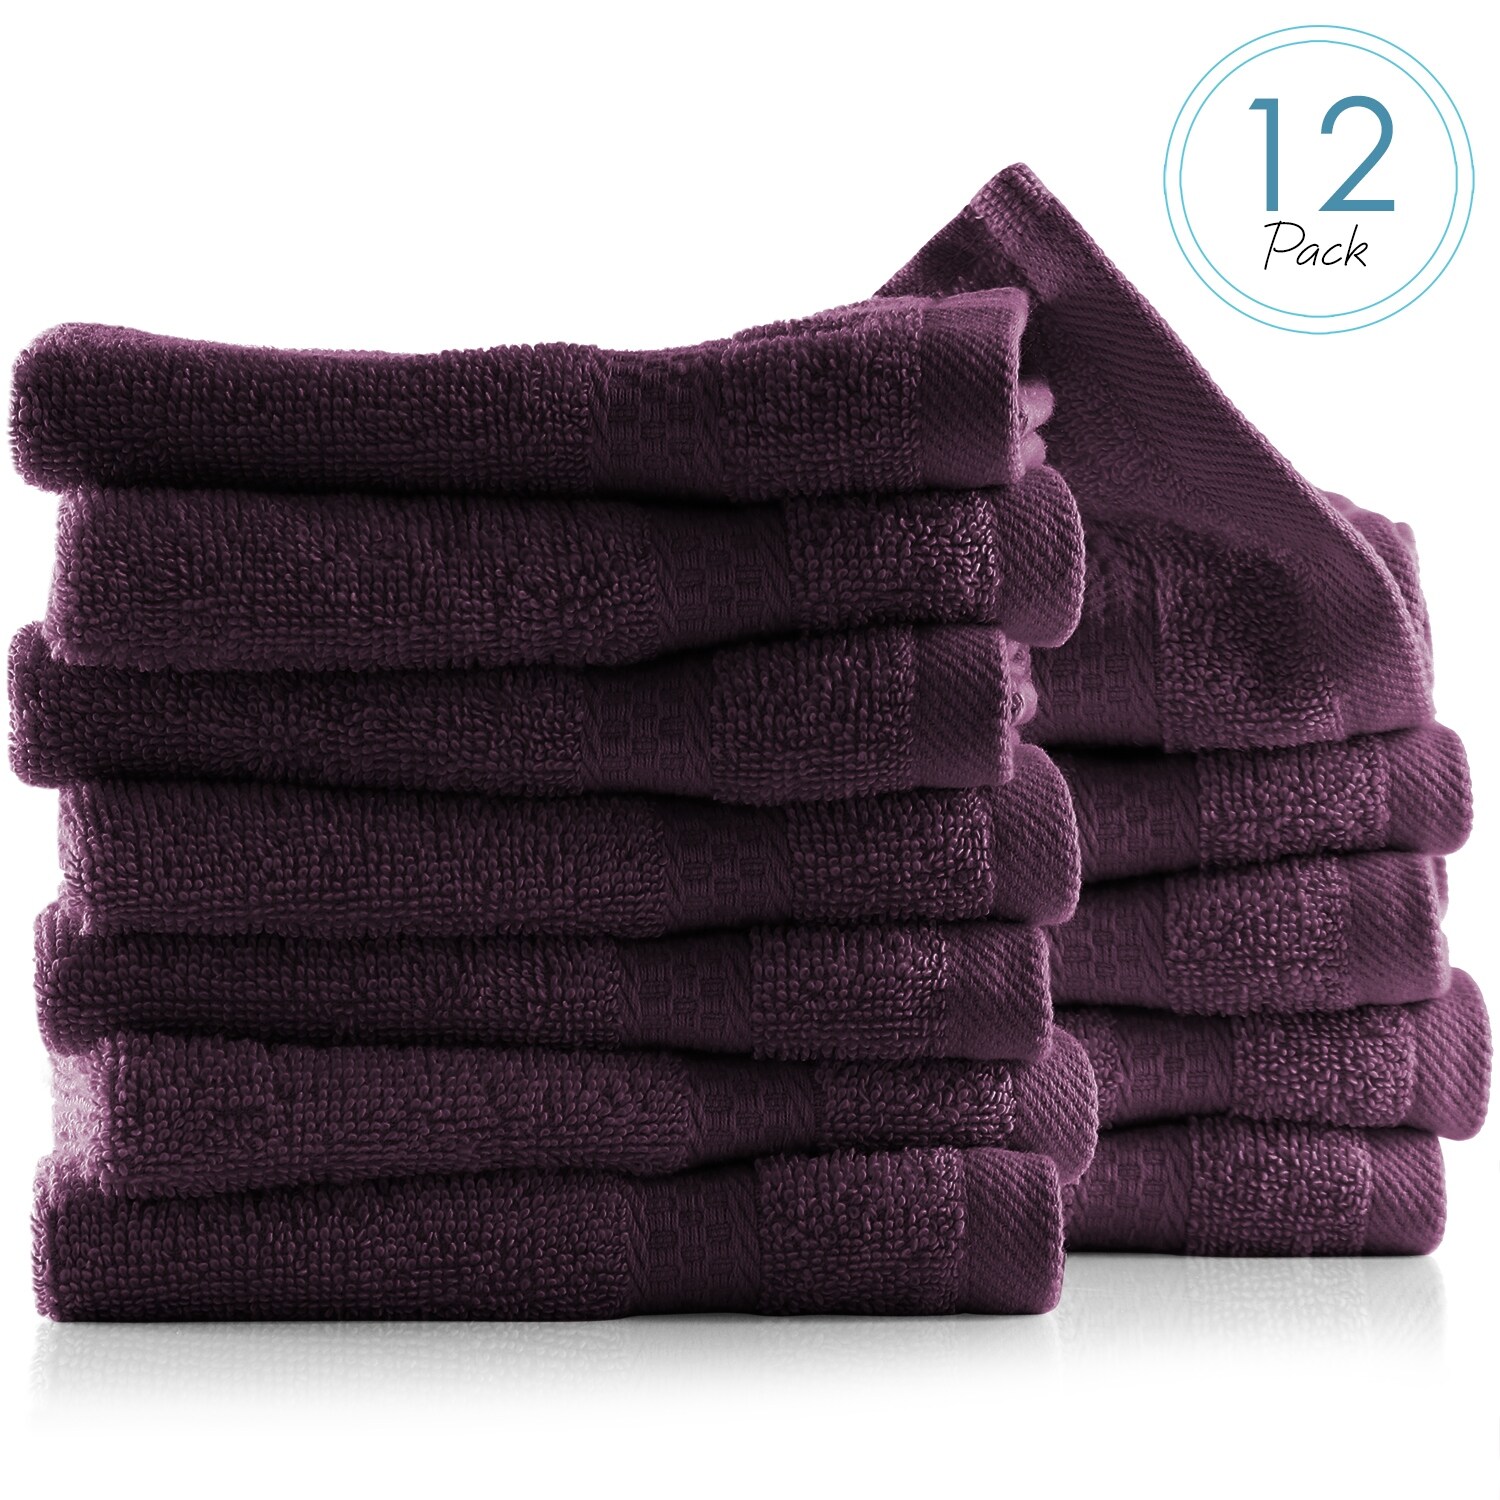 Hearth & Harbor 100 Percent Cotton Ultra Soft and Absorbent Bath Towel Set Cotton Purple Eggplant